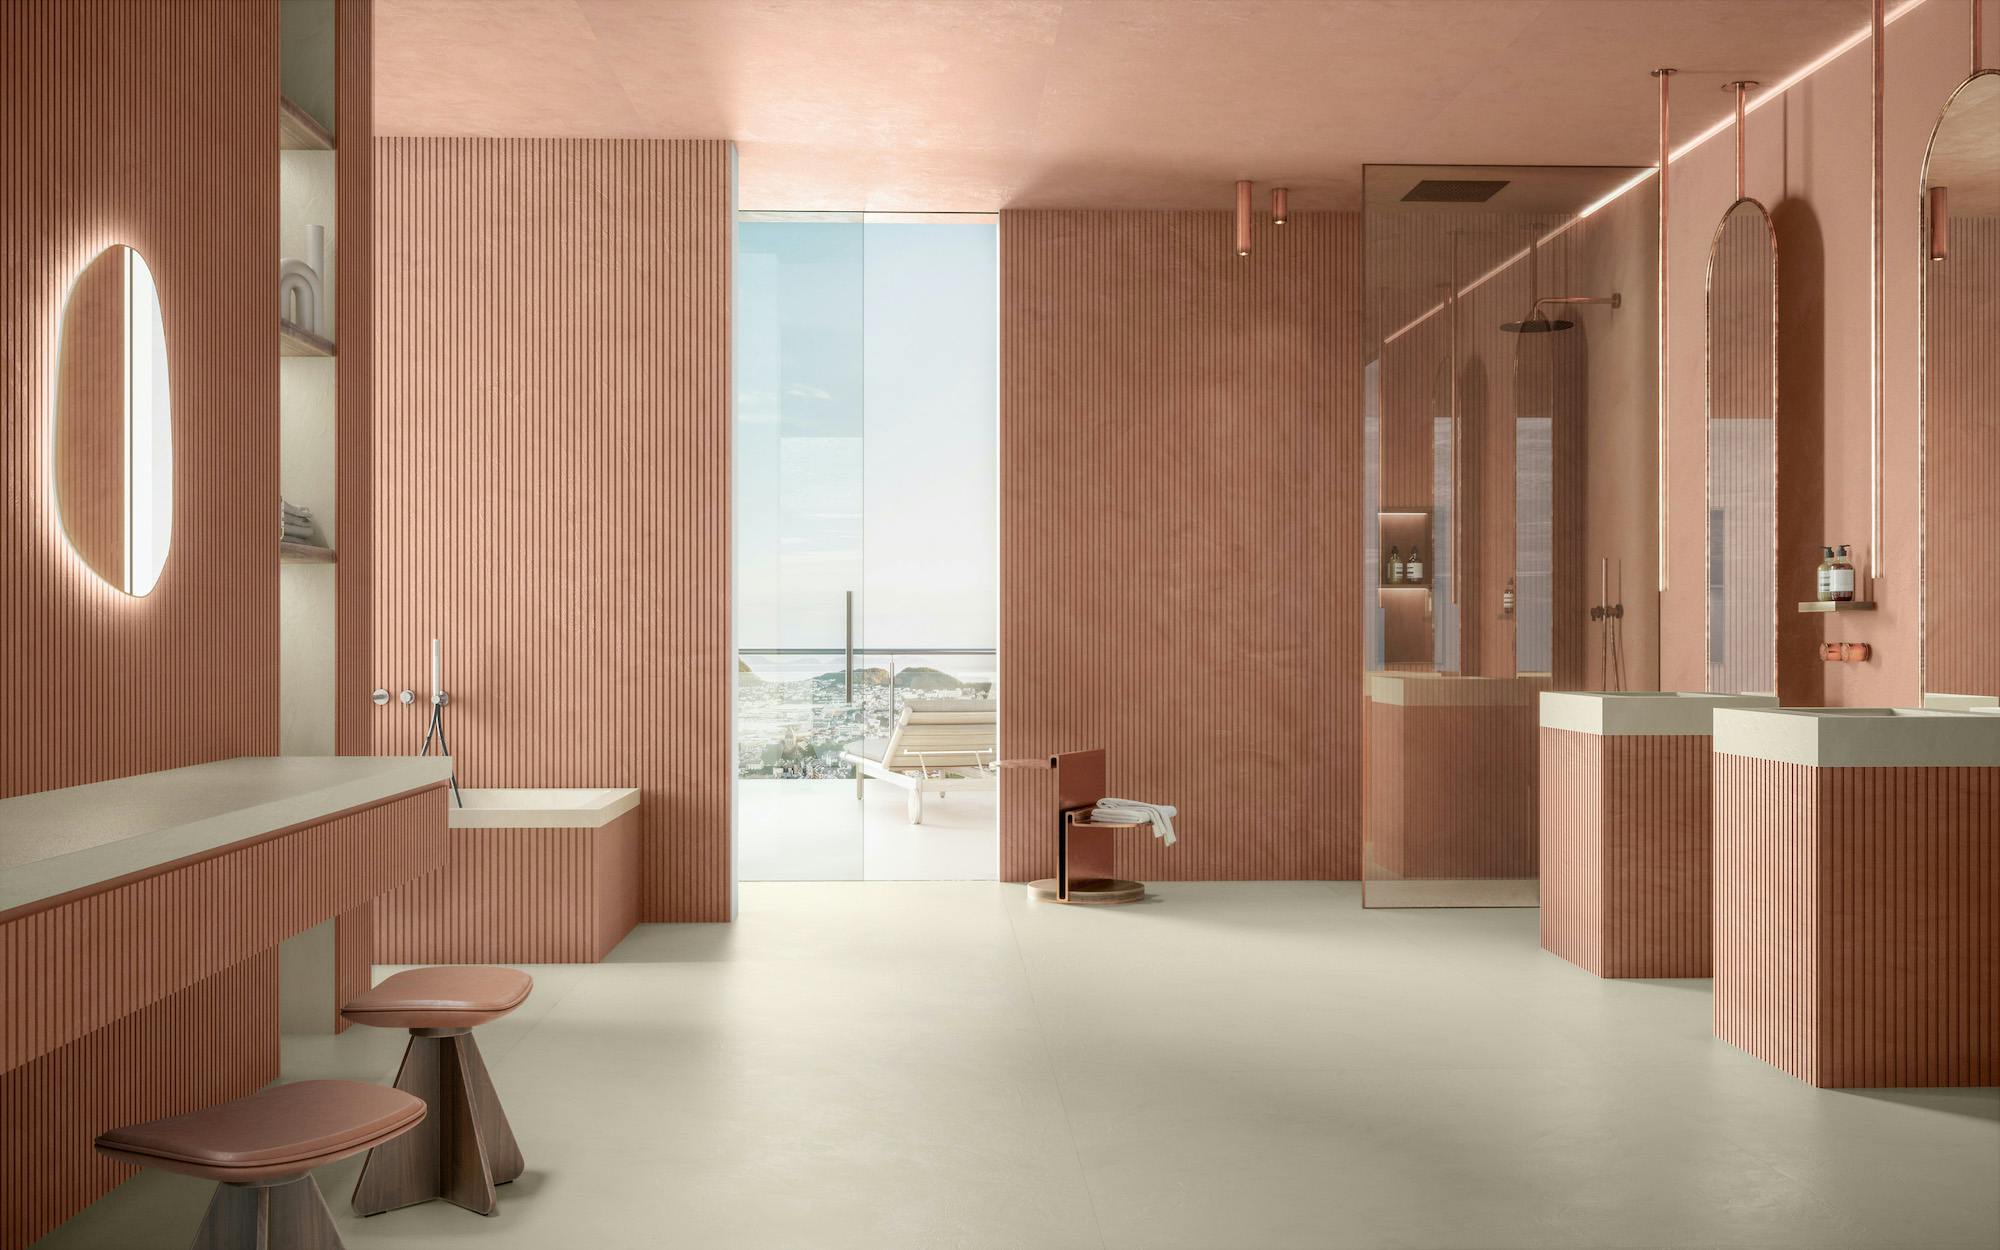 Numéro d'image 32 de la section actuelle de {{Grooved textures in the bathroom: a trend on the rise}} de Cosentino France